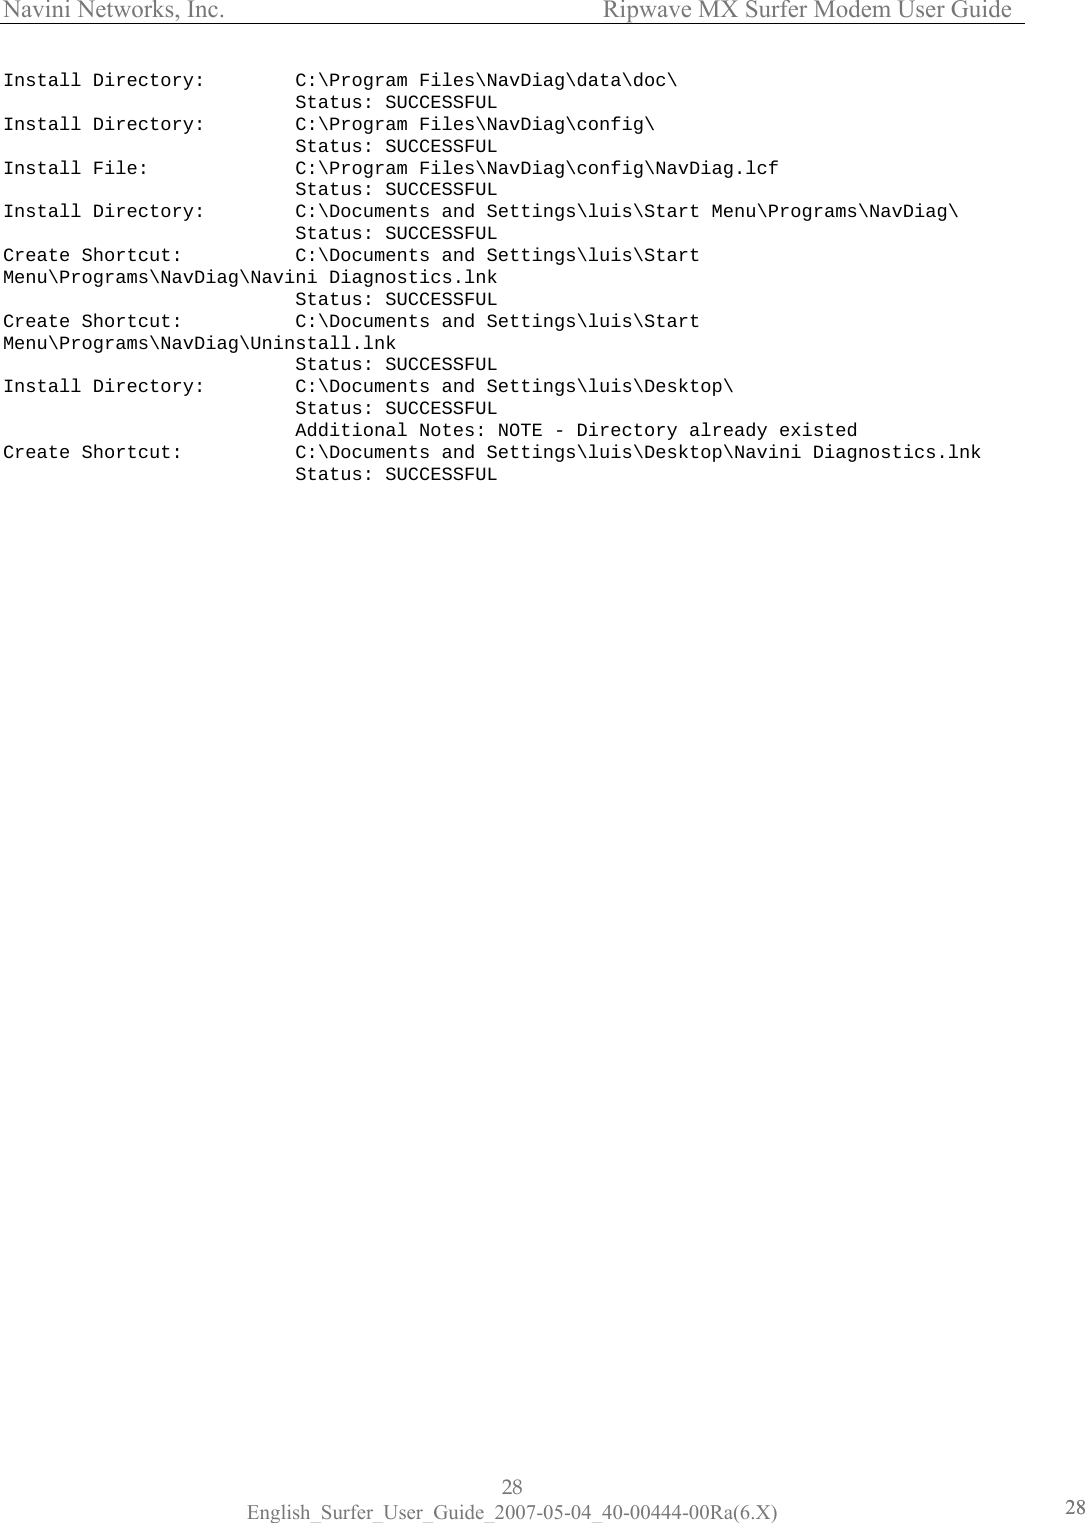 Navini Networks, Inc.      Ripwave MX Surfer Modem User Guide 28 English_Surfer_User_Guide_2007-05-04_40-00444-00Ra(6.X) 2828Install Directory:        C:\Program Files\NavDiag\data\doc\                           Status: SUCCESSFUL Install Directory:        C:\Program Files\NavDiag\config\                           Status: SUCCESSFUL Install File:             C:\Program Files\NavDiag\config\NavDiag.lcf                           Status: SUCCESSFUL Install Directory:        C:\Documents and Settings\luis\Start Menu\Programs\NavDiag\                           Status: SUCCESSFUL Create Shortcut:          C:\Documents and Settings\luis\Start Menu\Programs\NavDiag\Navini Diagnostics.lnk                           Status: SUCCESSFUL Create Shortcut:          C:\Documents and Settings\luis\Start Menu\Programs\NavDiag\Uninstall.lnk                           Status: SUCCESSFUL Install Directory:        C:\Documents and Settings\luis\Desktop\                           Status: SUCCESSFUL                           Additional Notes: NOTE - Directory already existed Create Shortcut:          C:\Documents and Settings\luis\Desktop\Navini Diagnostics.lnk                           Status: SUCCESSFUL  